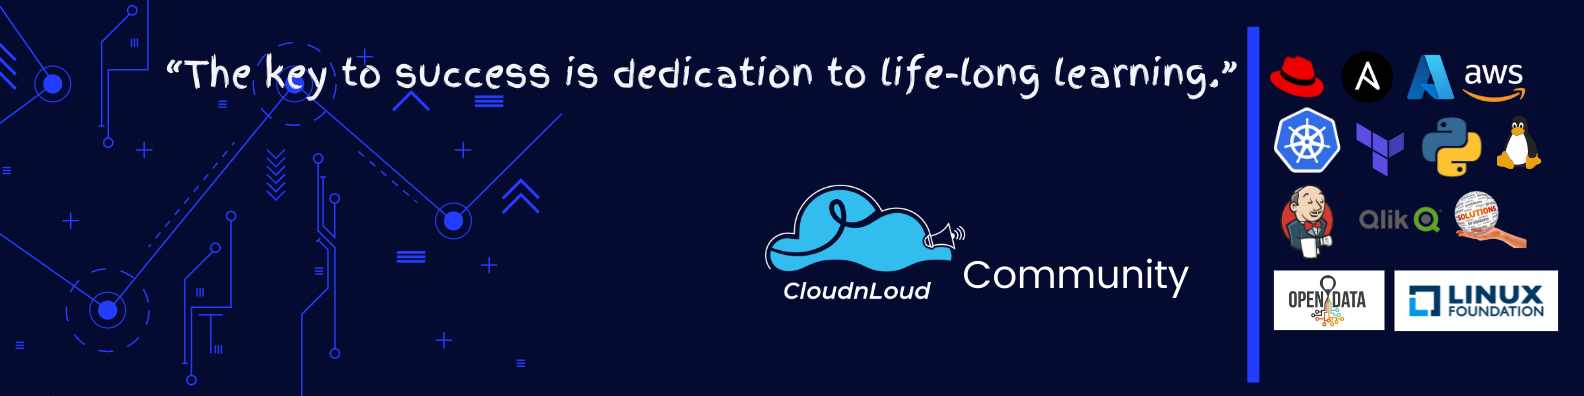 Cloudnloud-Community-banner.png